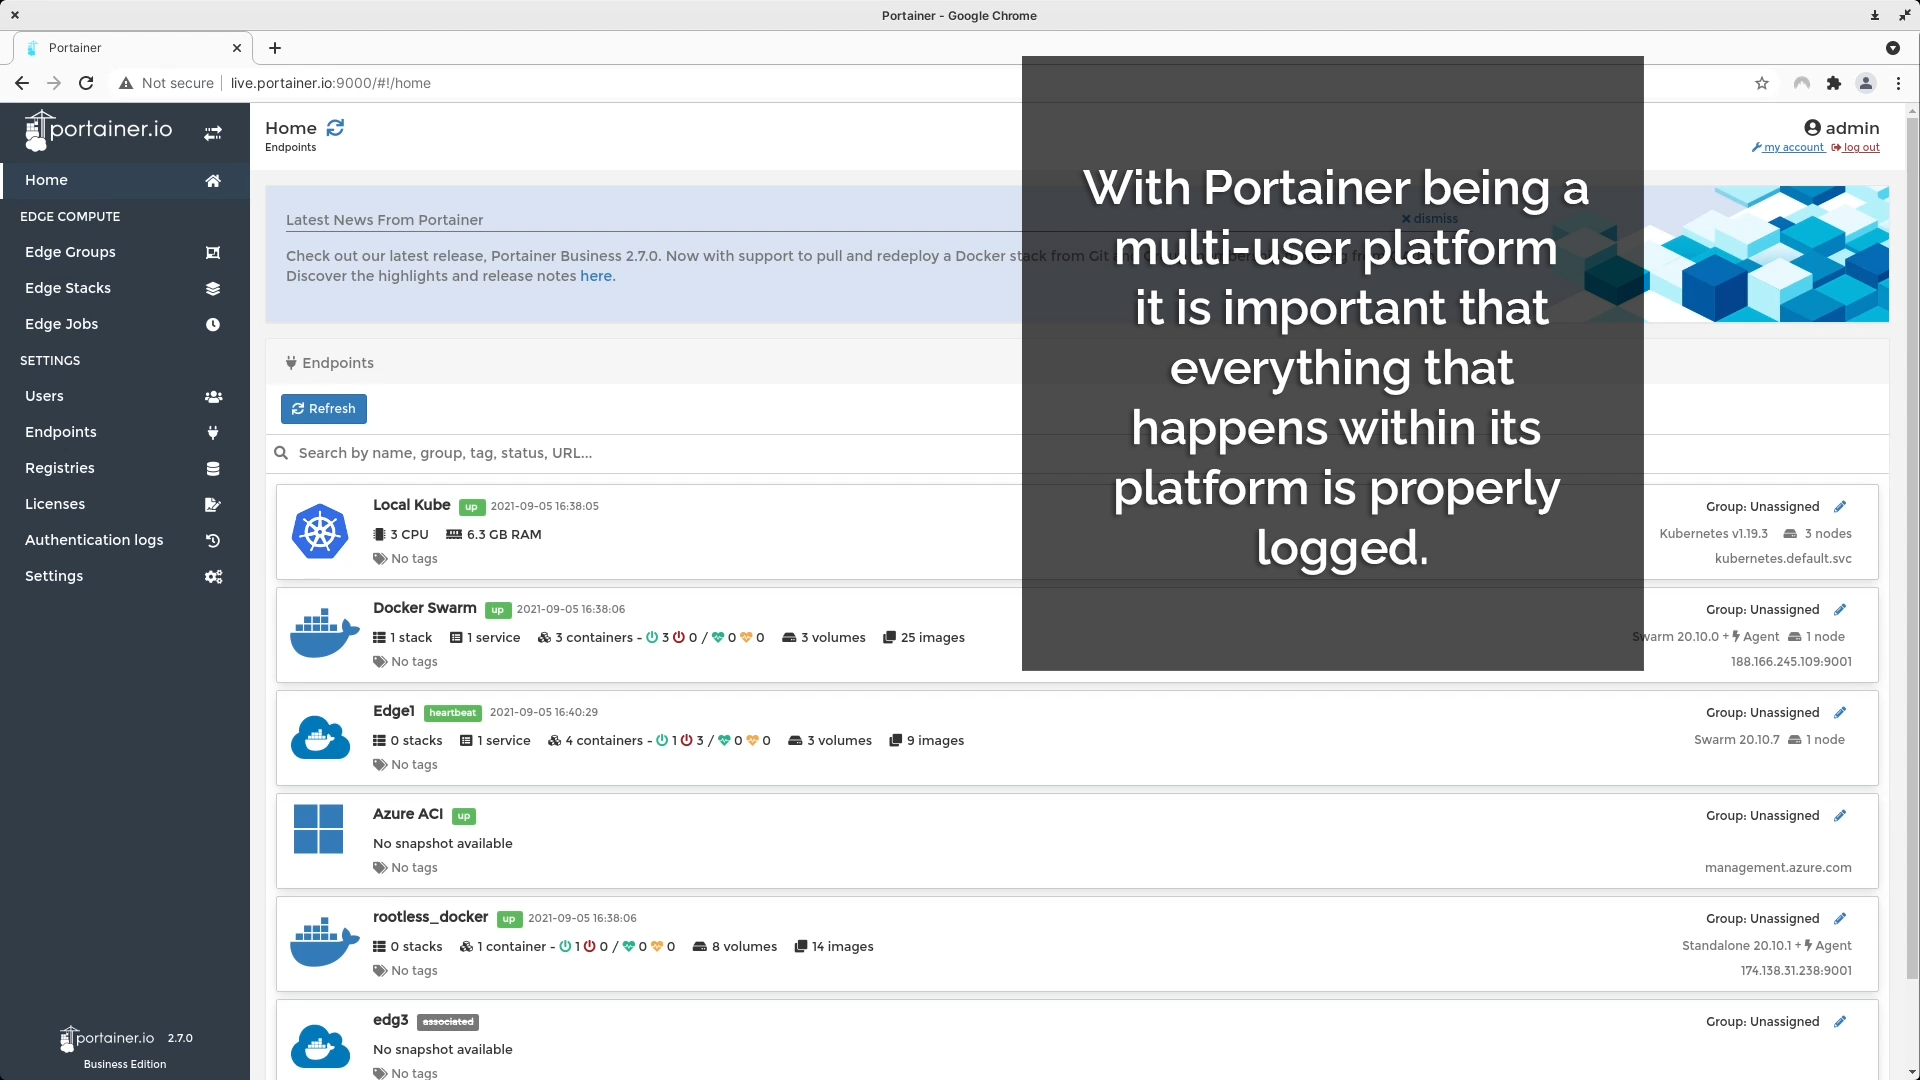 Portainer is a multi-user platform